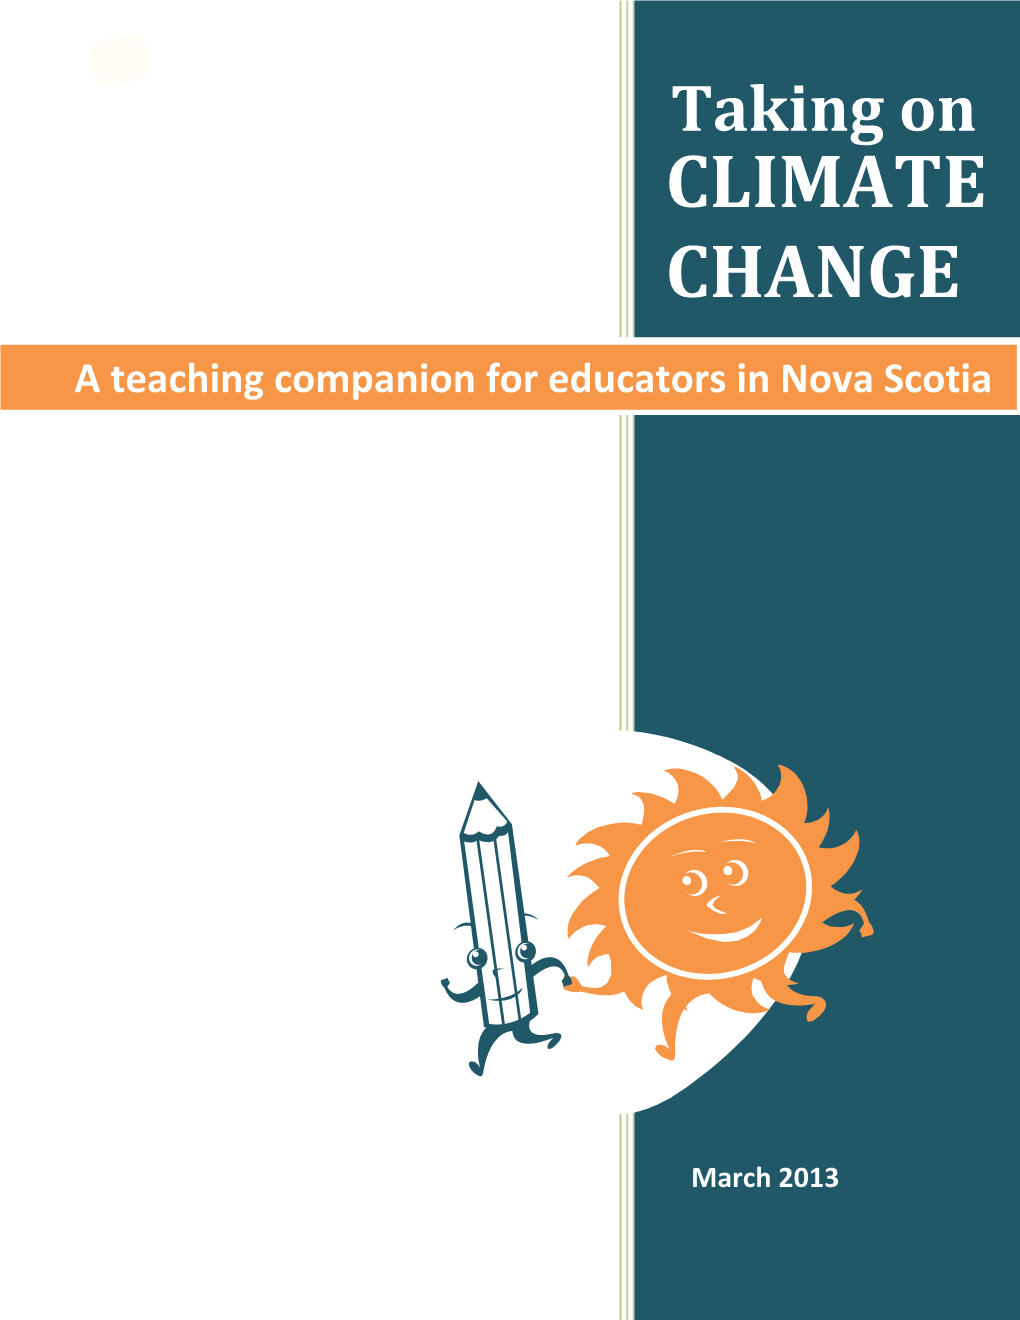 A Teaching Companion for Educators in Nova Scotia